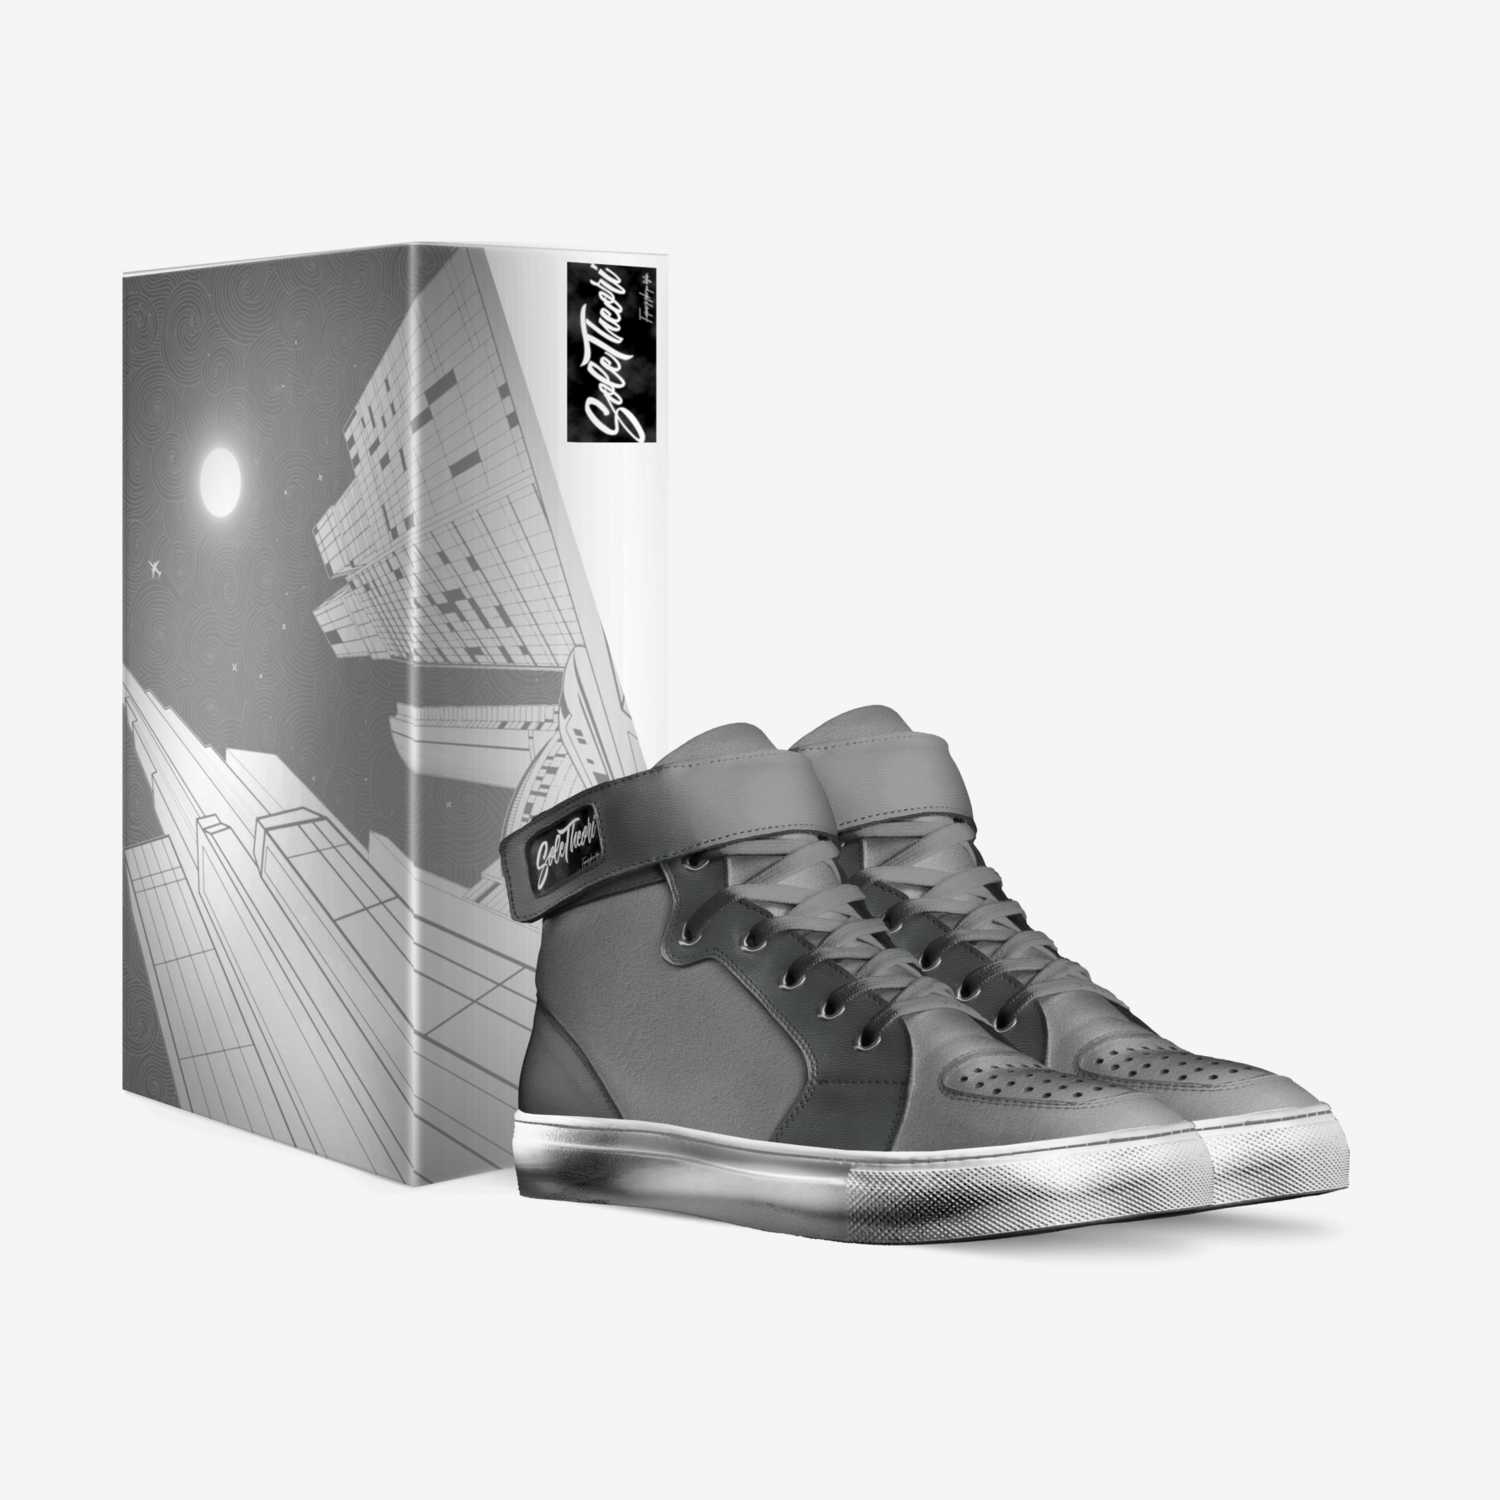 GrayCityShades custom made in Italy shoes by Wendell Tucker | Box view